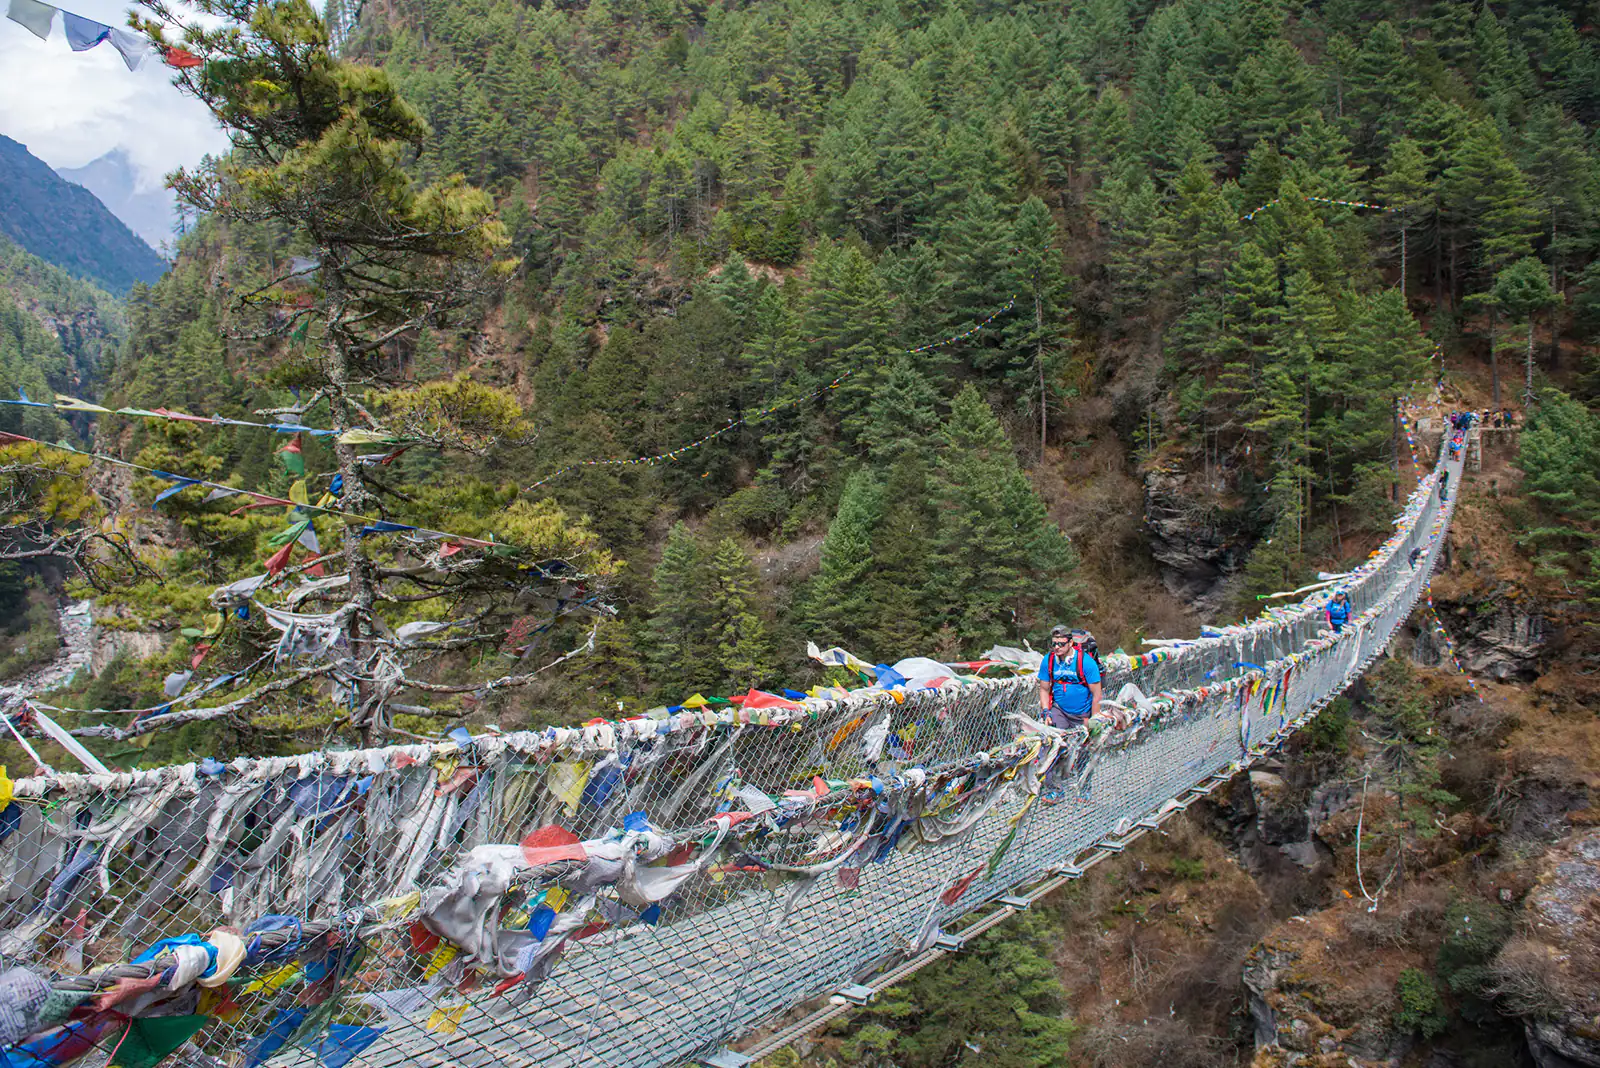 trekker cross the river by suspension bridge